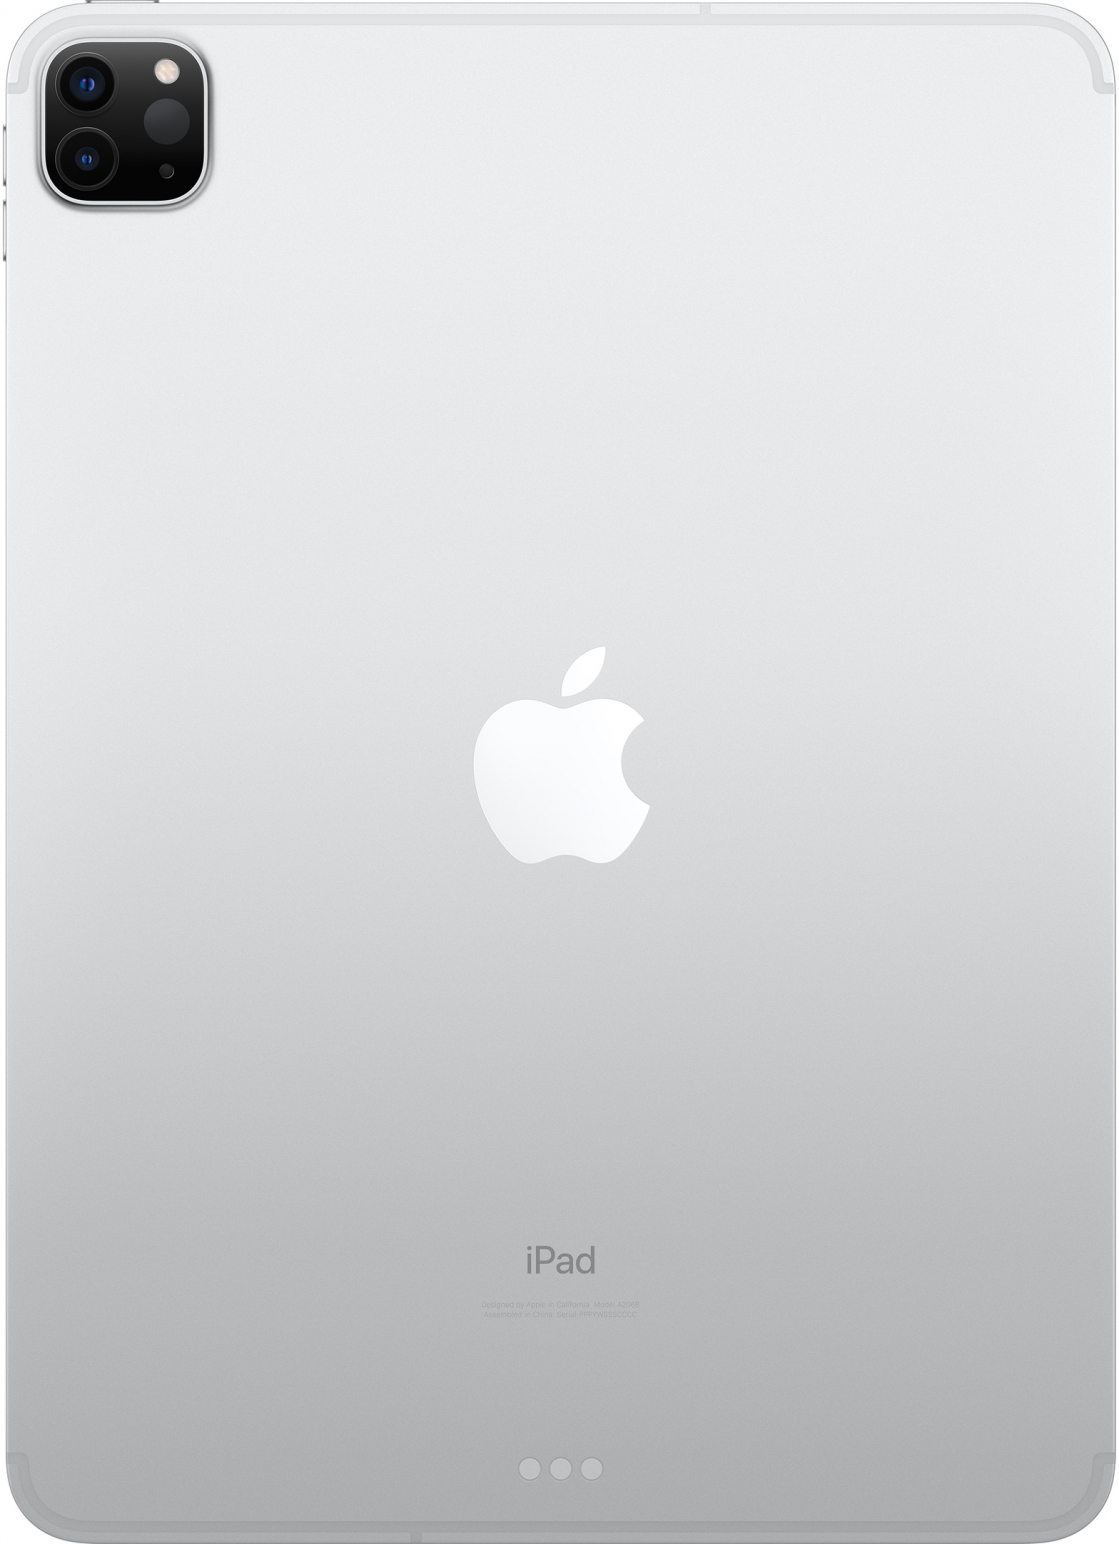 Планшет Apple iPad Pro 11 (2020) 128 GB Wi-Fi Silver (MY252RU/A)